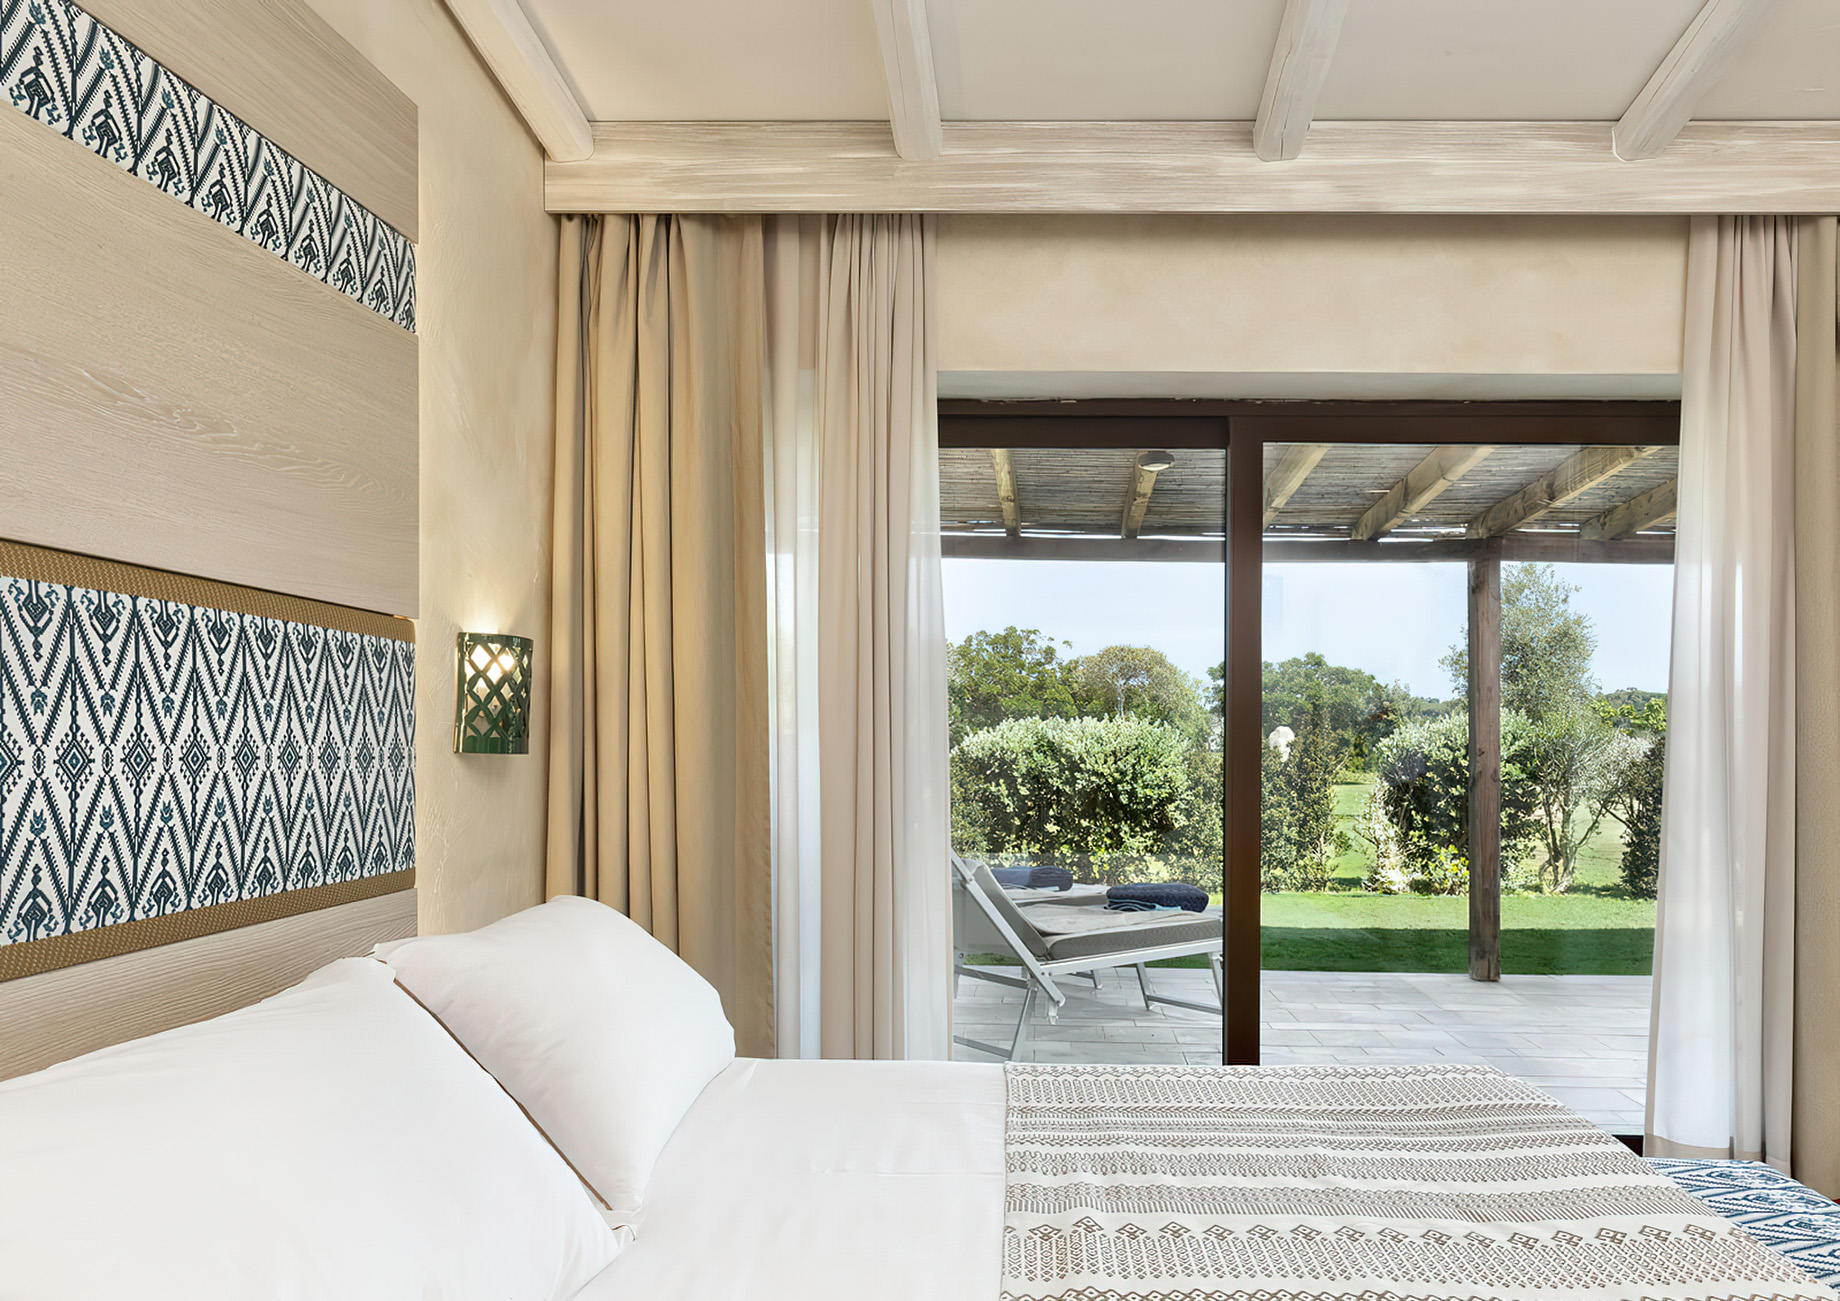 Baglioni Resort Sardinia – San Teodoro, Sardegna, Italy – Garden Suite Bedroom View